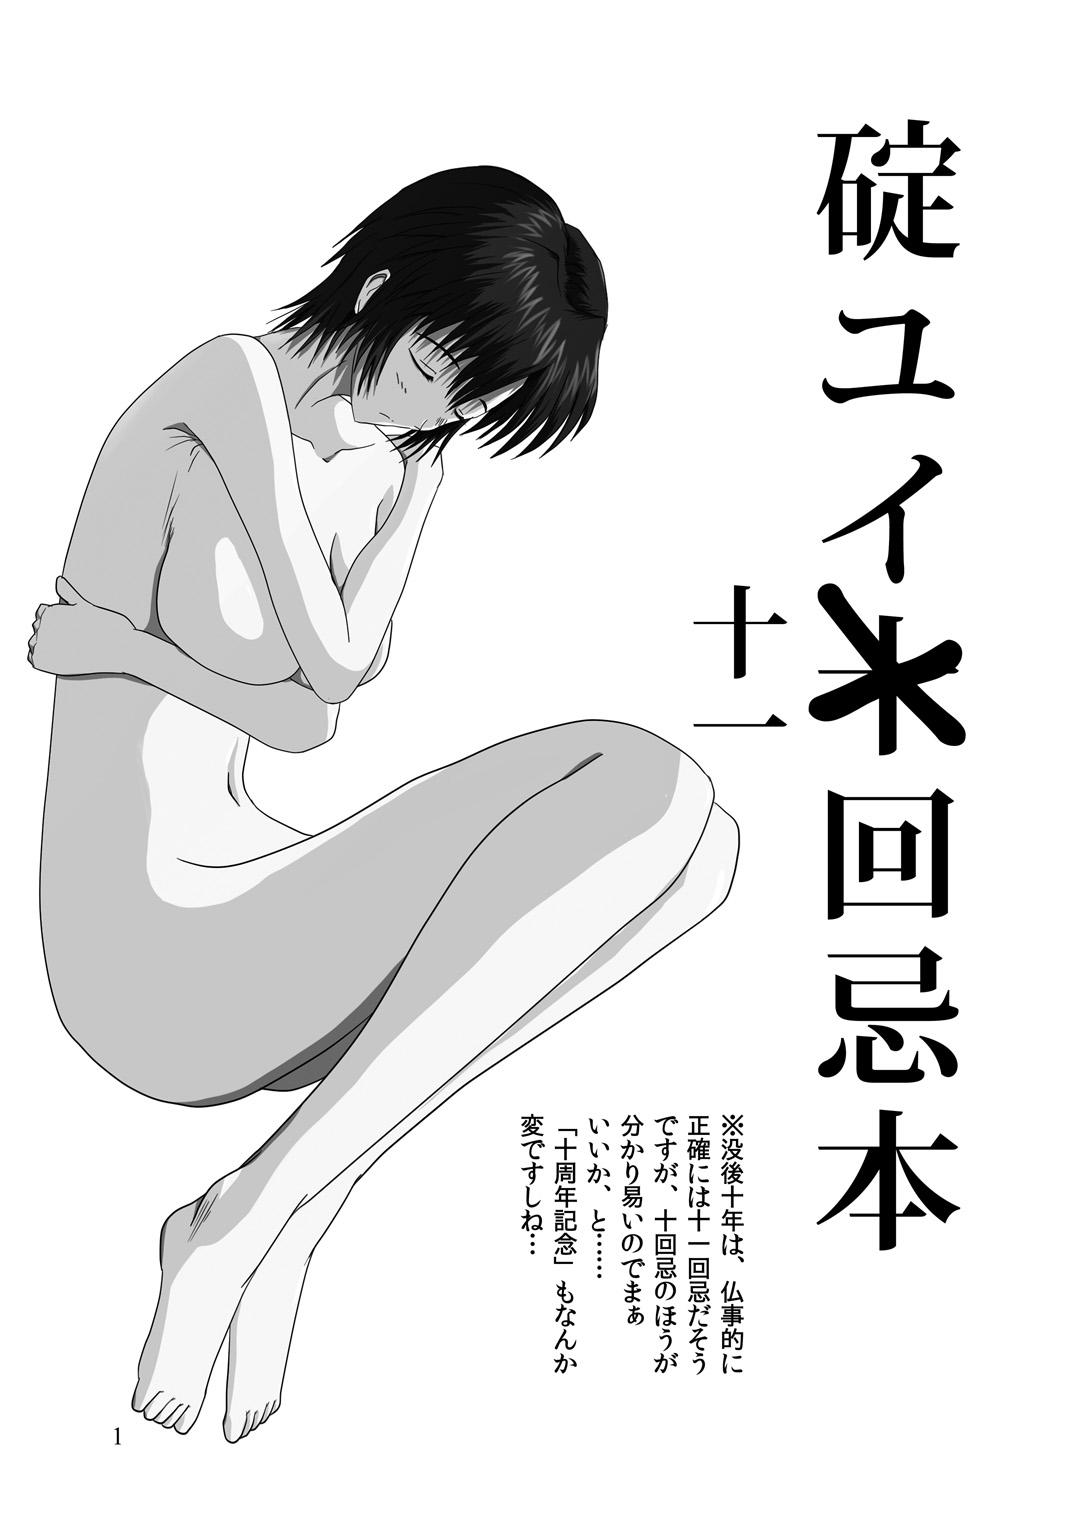 Motel Yui Ikari 10th Anniversary Book - beyond the time - Neon genesis evangelion Massage - Picture 2